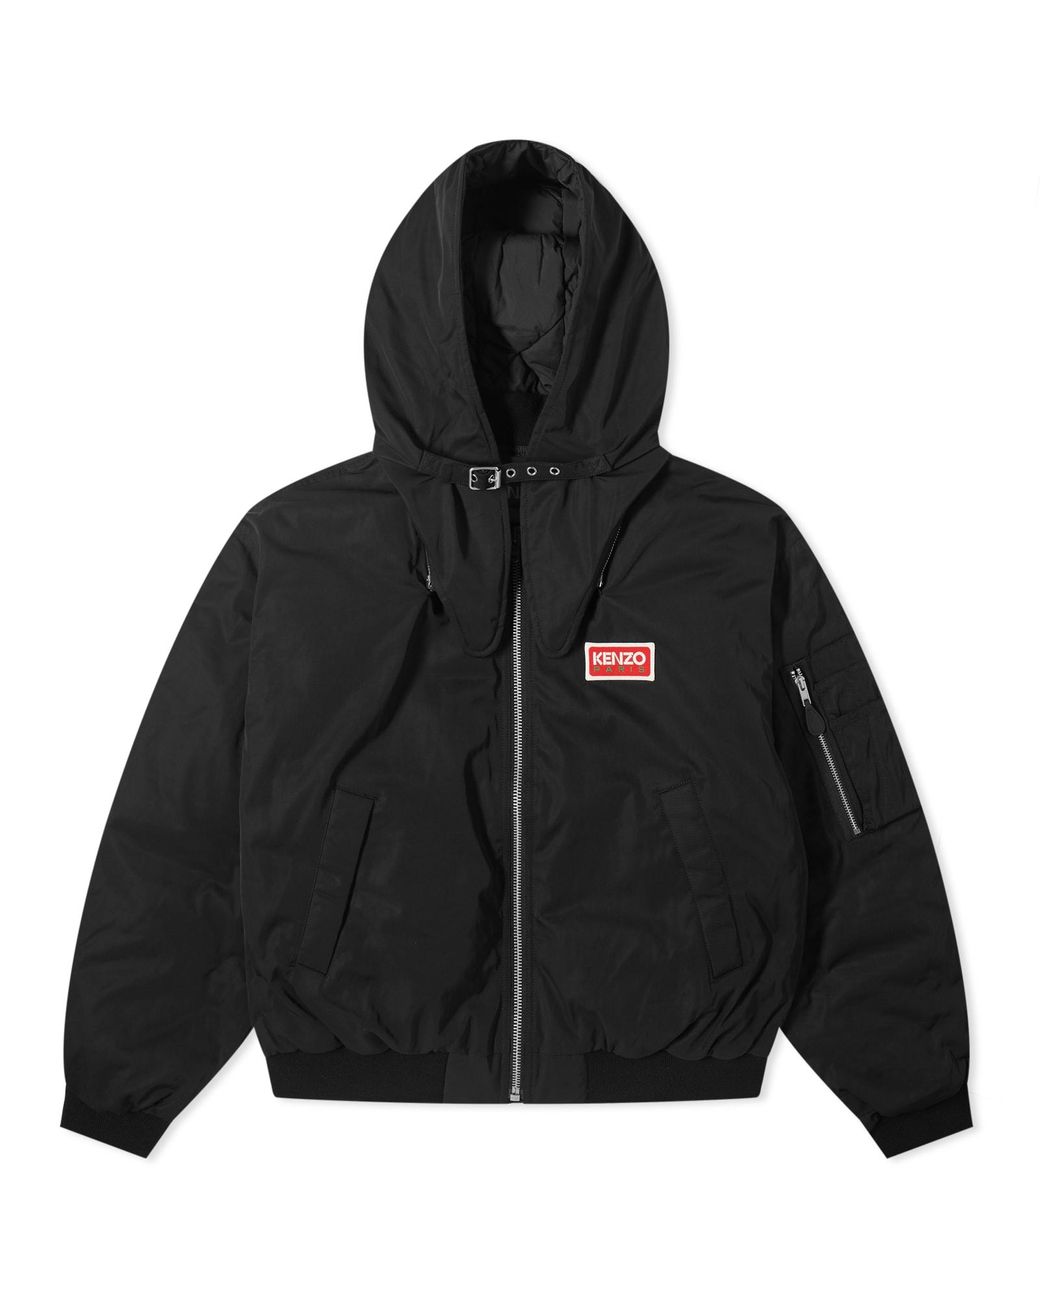 KENZO Hooded Short Parka Jacket in Black for Men | Lyst UK